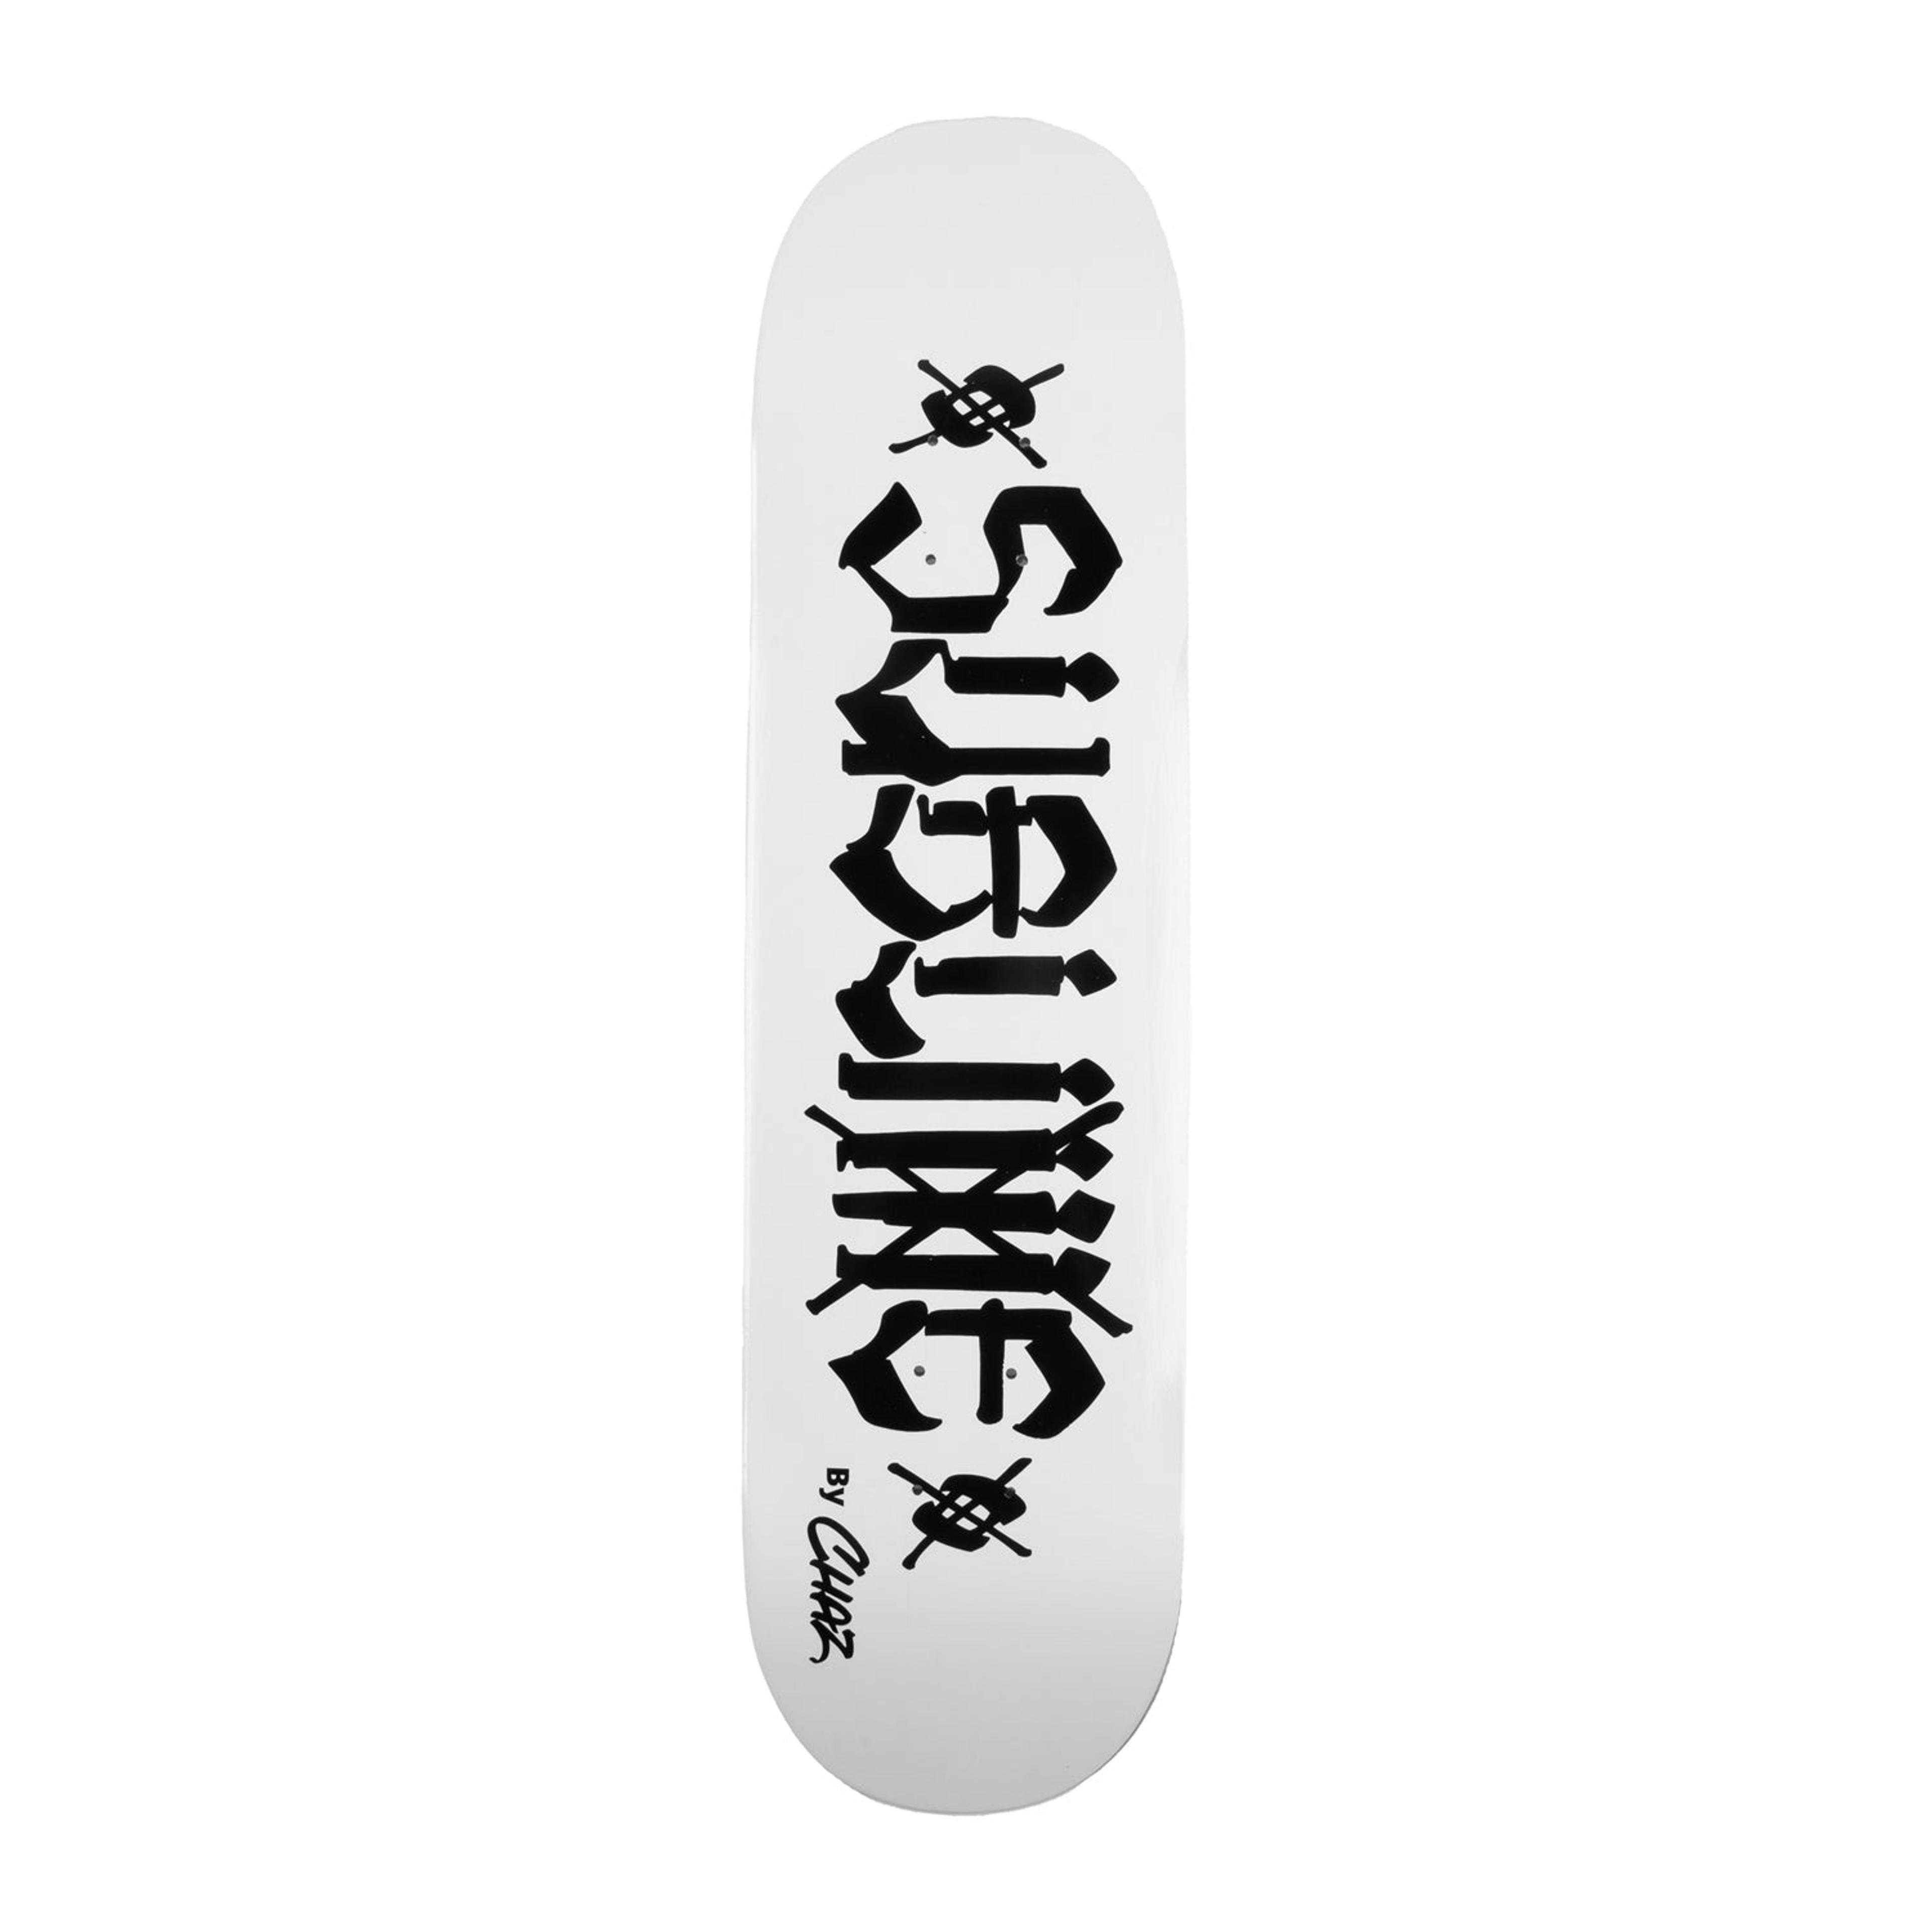 Alternate View 1 of Sublime x Chaz Logo Skateboard